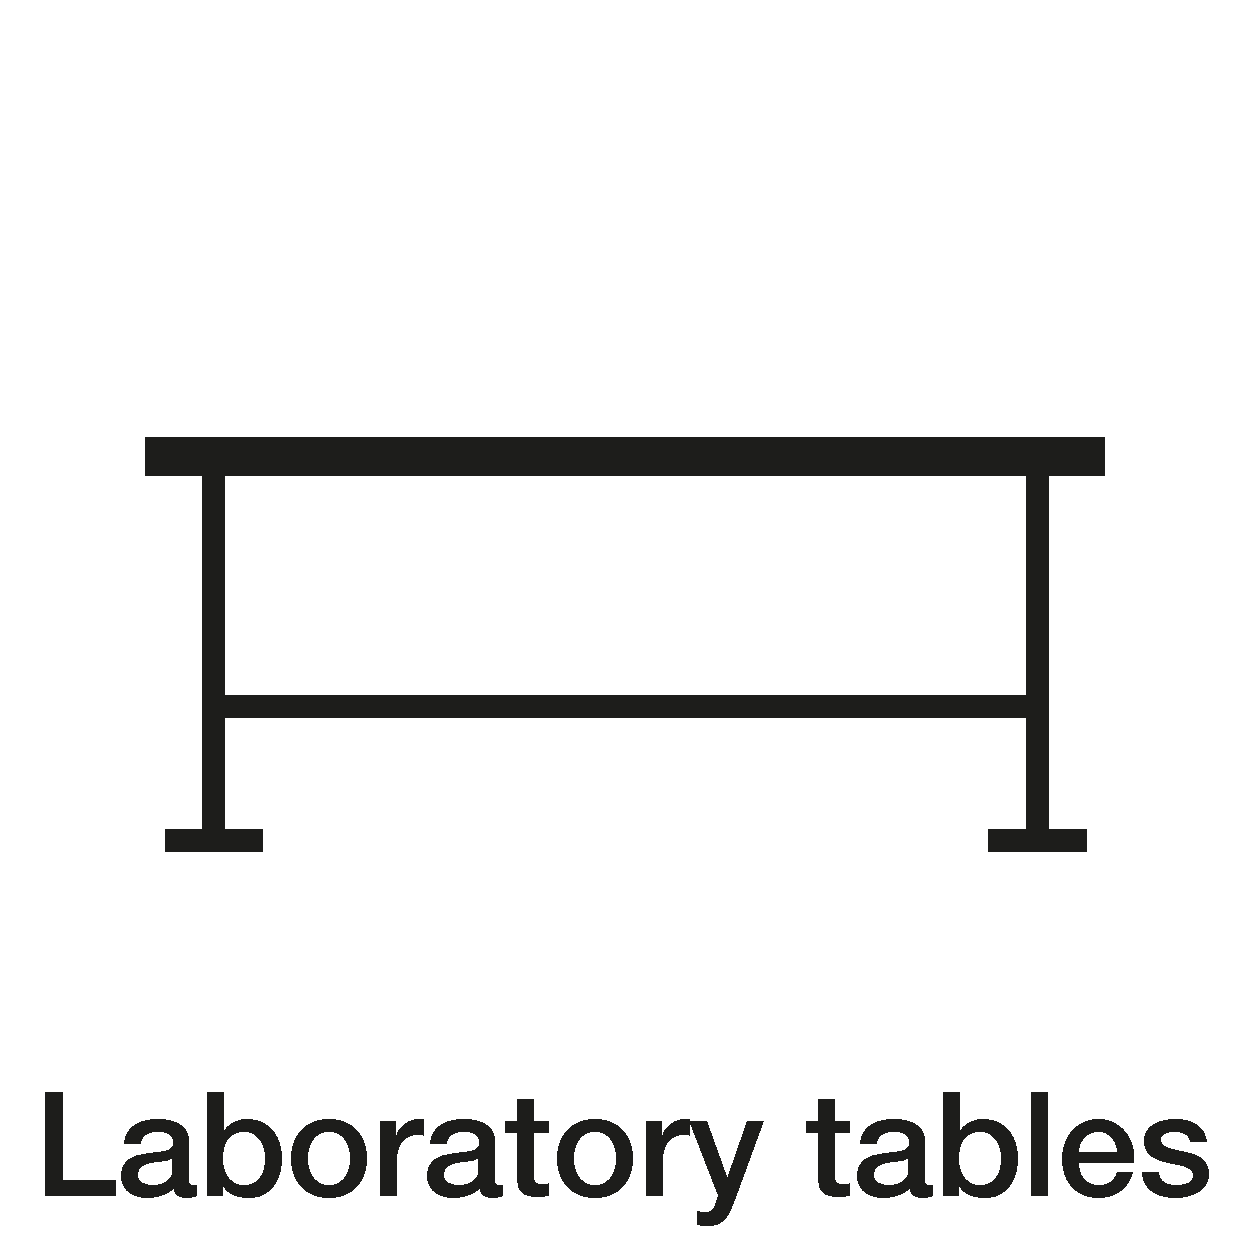 Laboratory tables